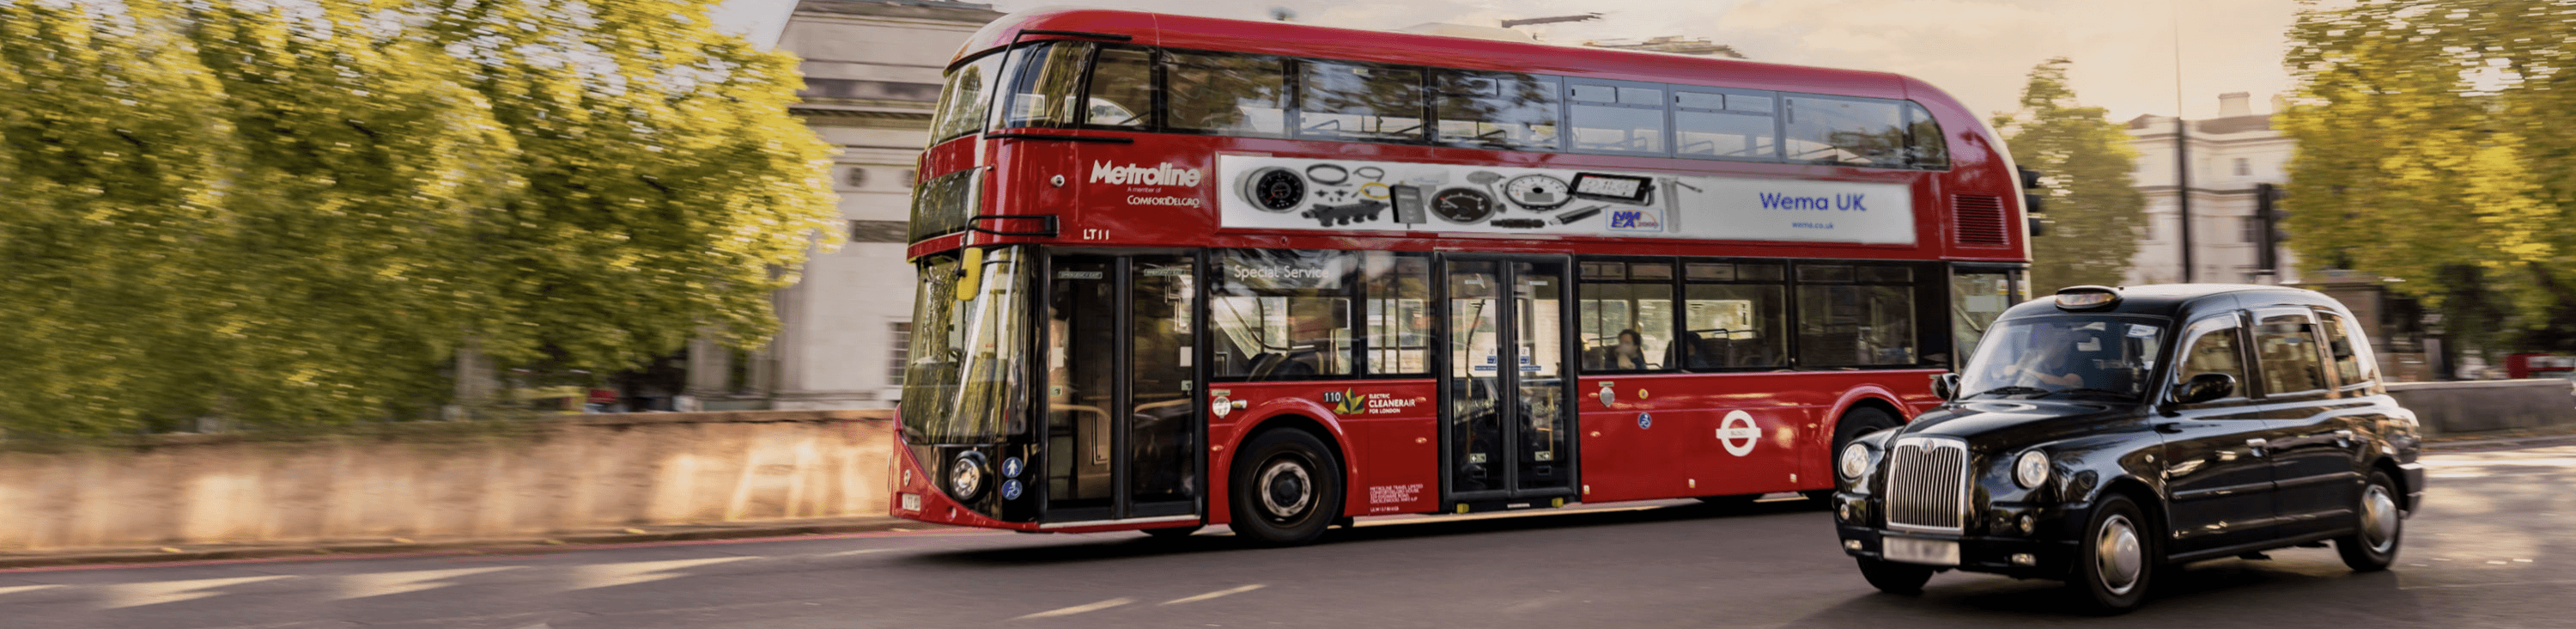 sensors for tuck and bus - Wema UK